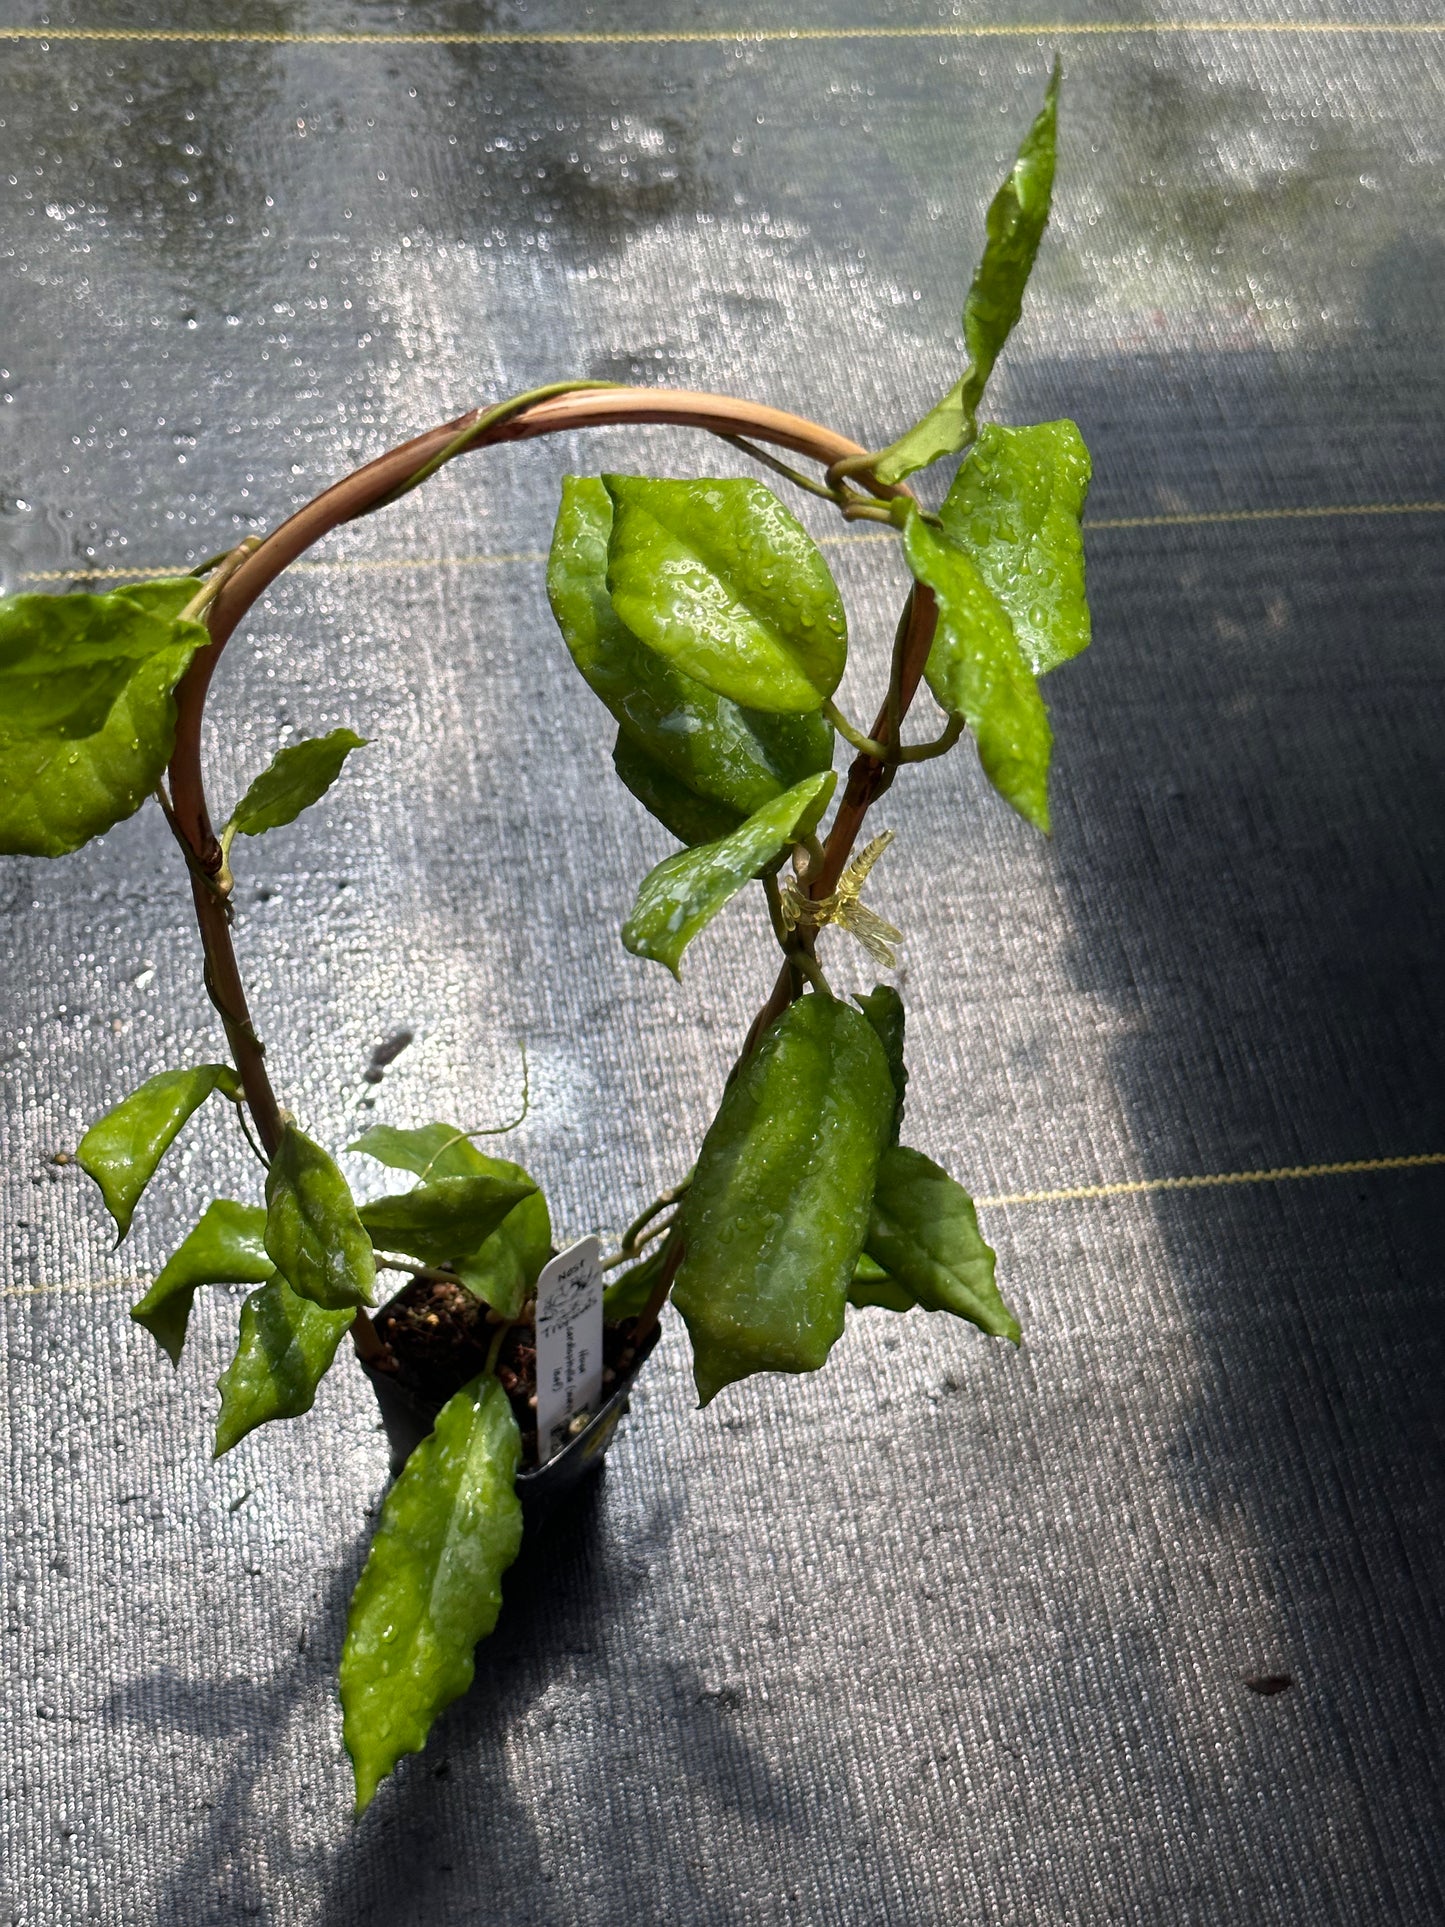 Hoya cardiophylla (wavy leaf) - Trellised